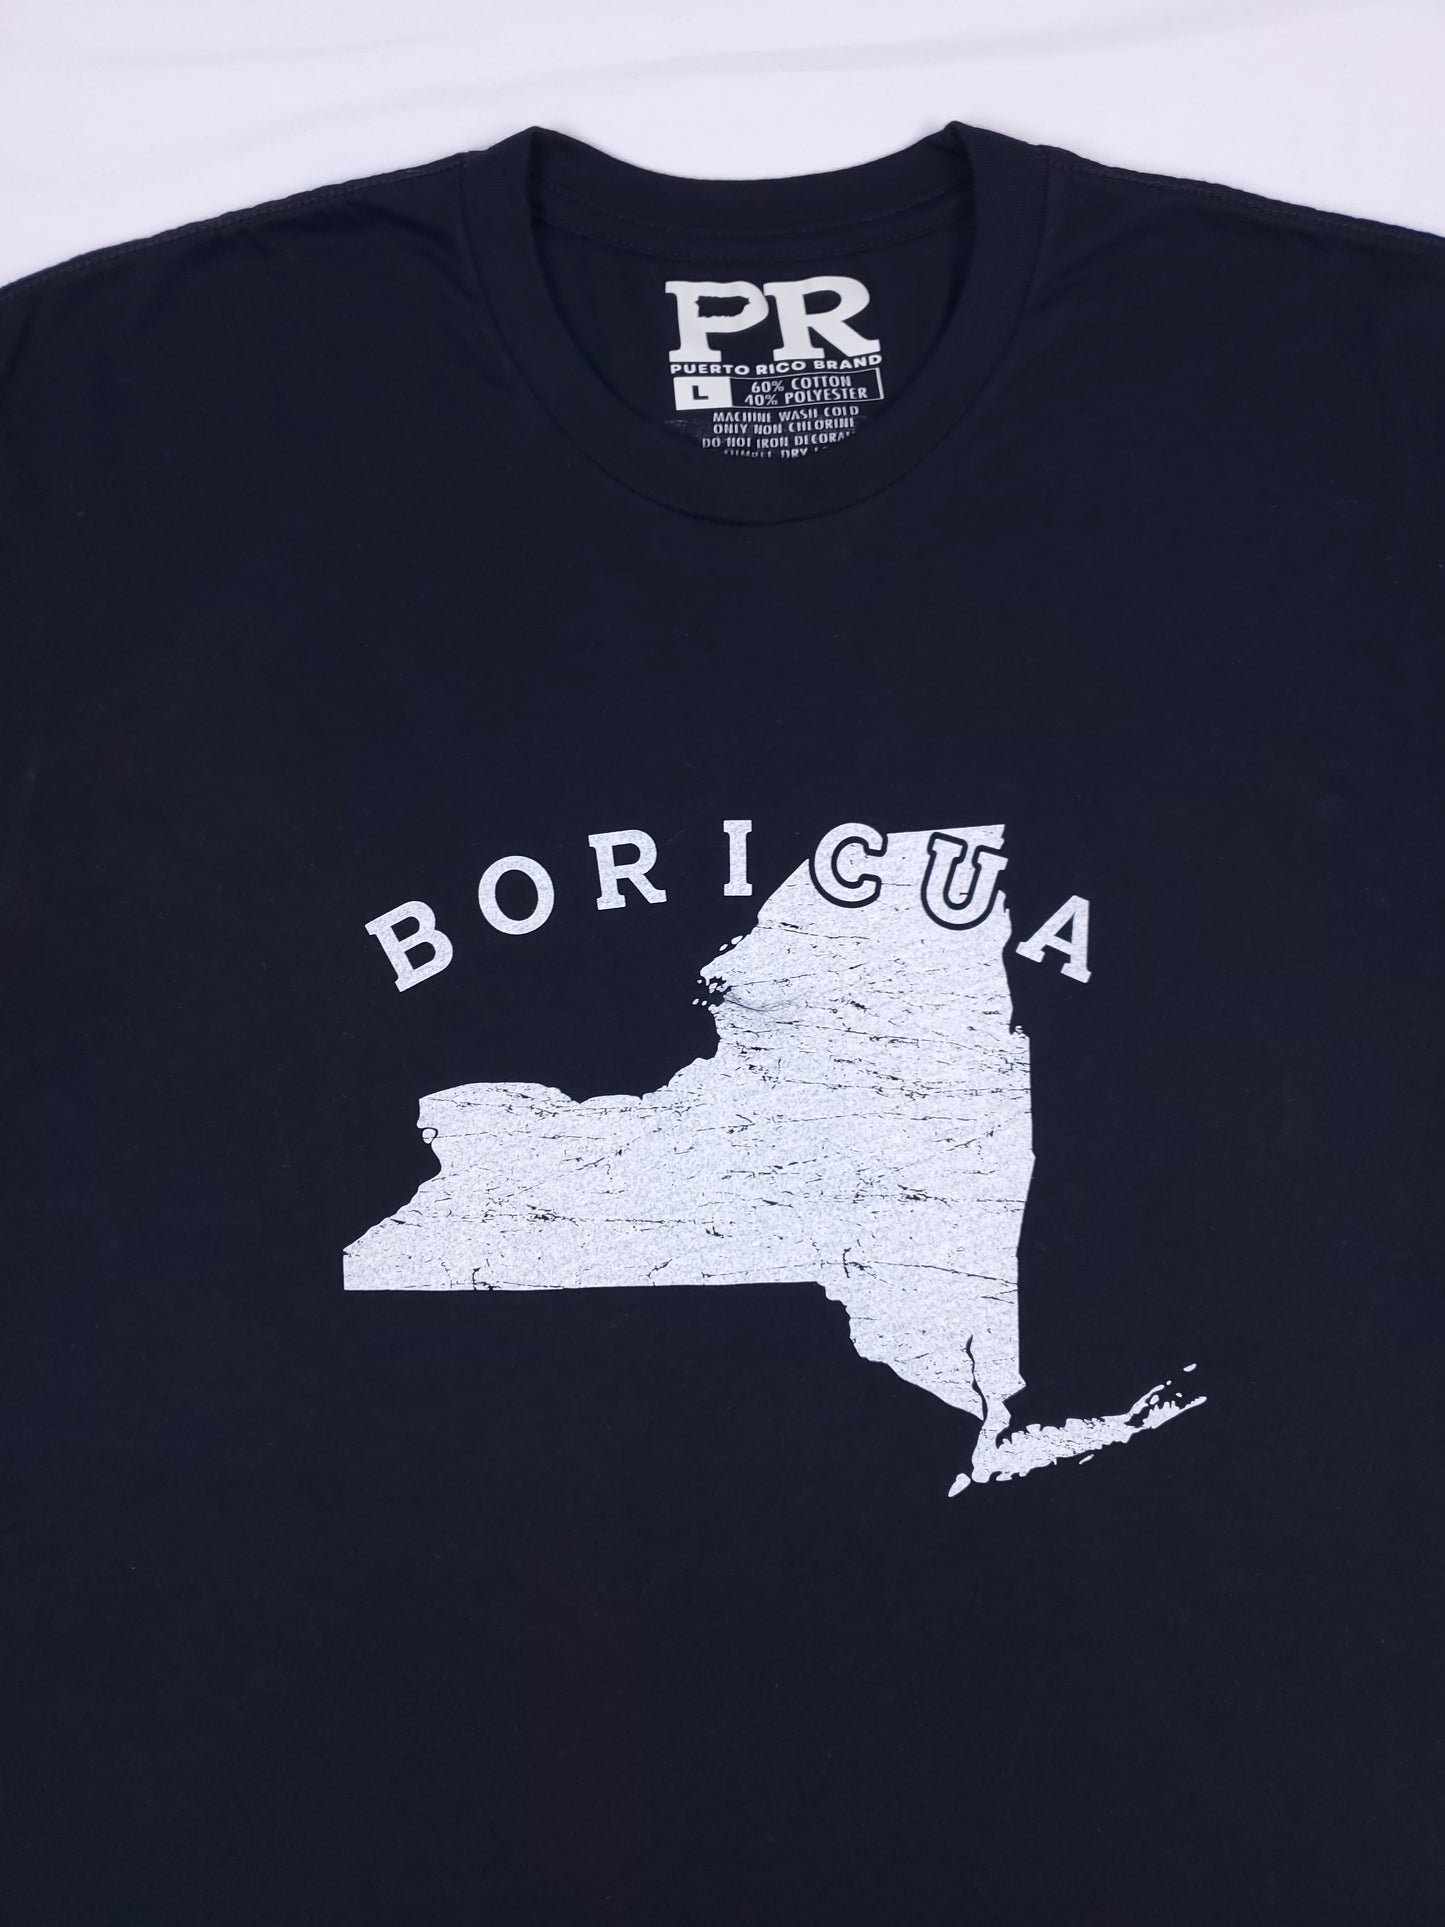 Boricua - New York